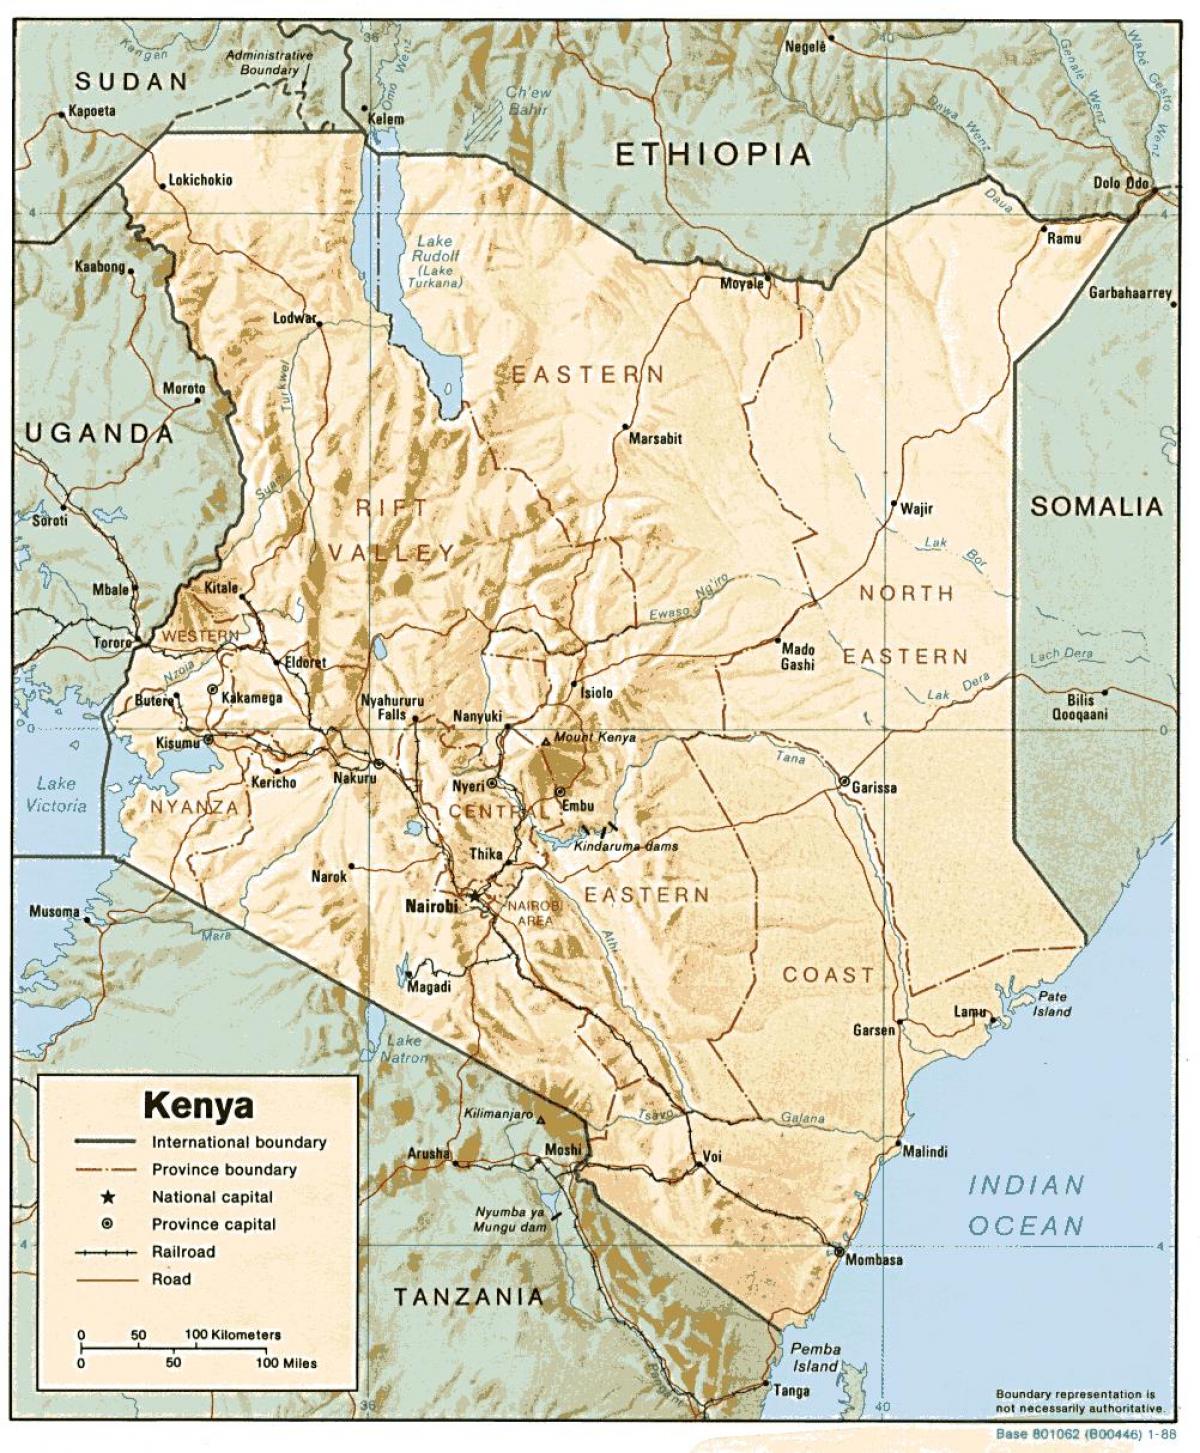 mapa Kenya erakutsiz, herri handietan